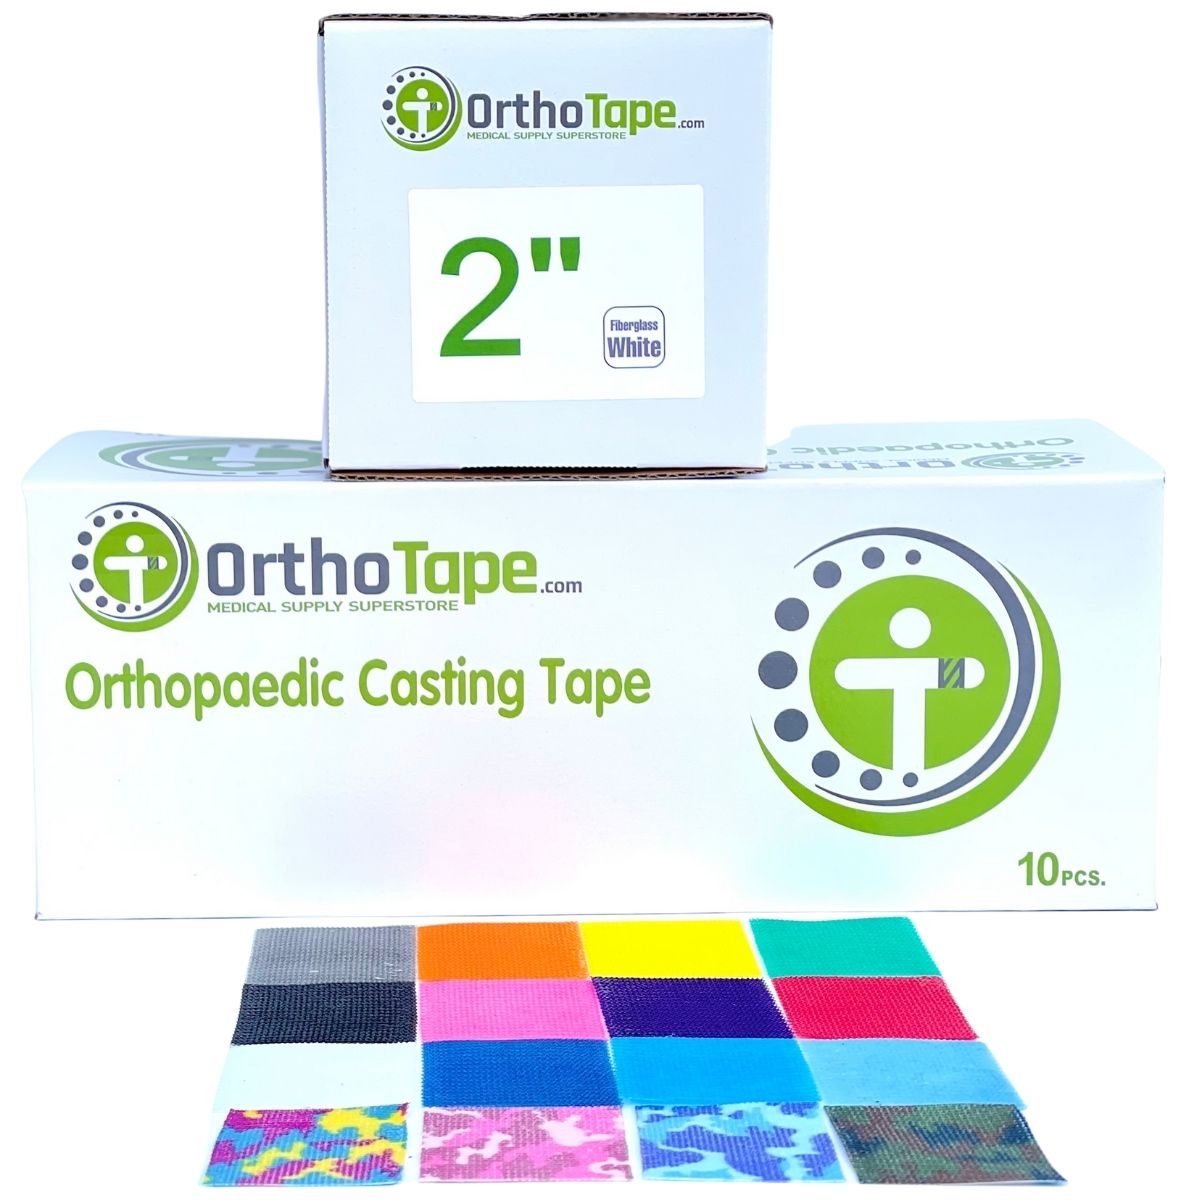 OrthoTape Premium Fiberglass Cast Tape |2 INCH - 10 ROLL BOX|